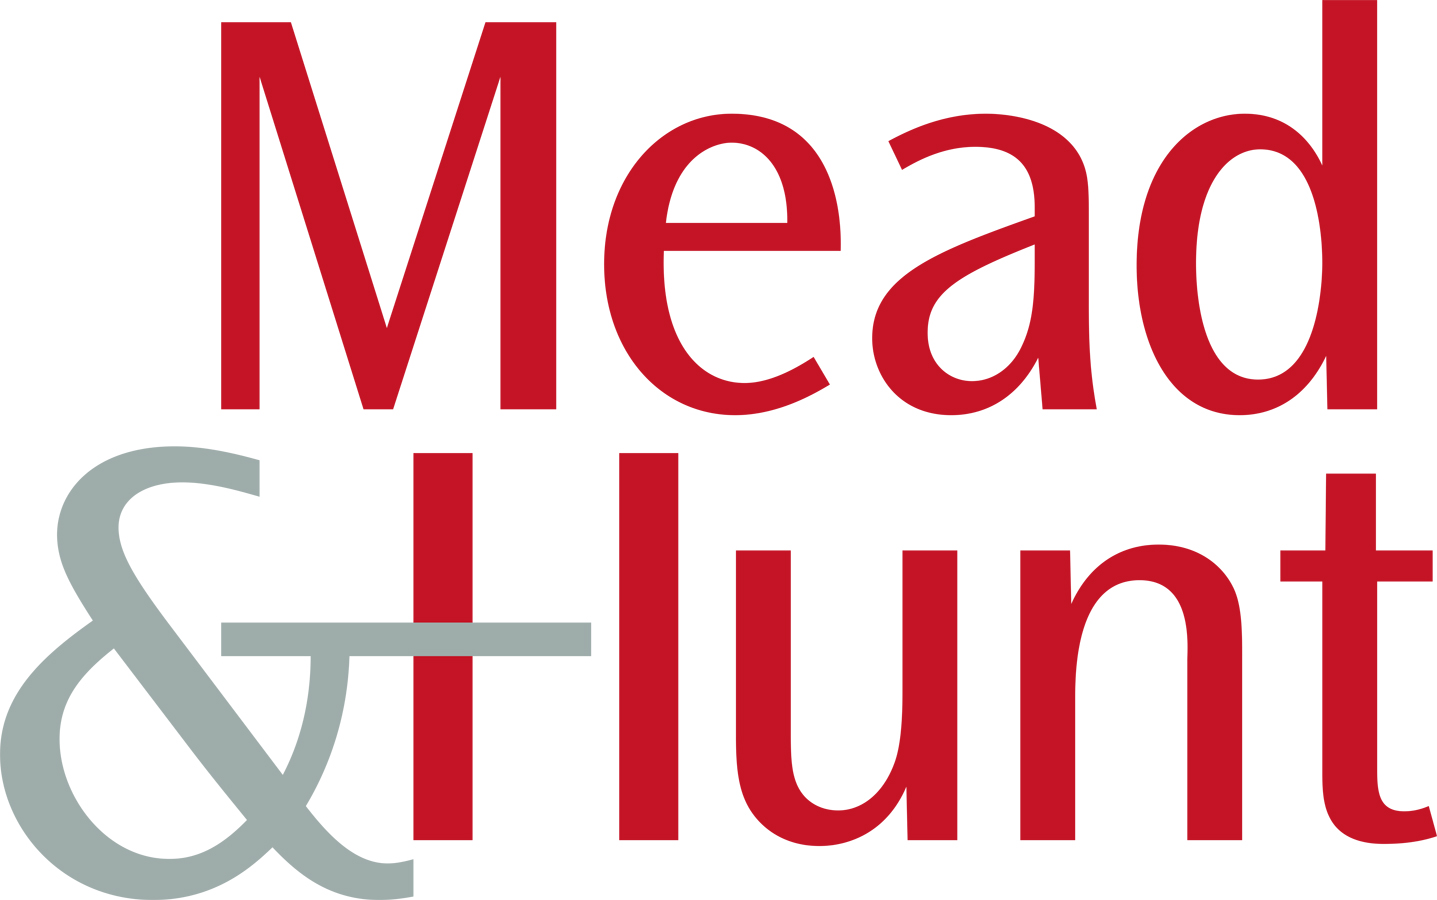 Mead & Hunt